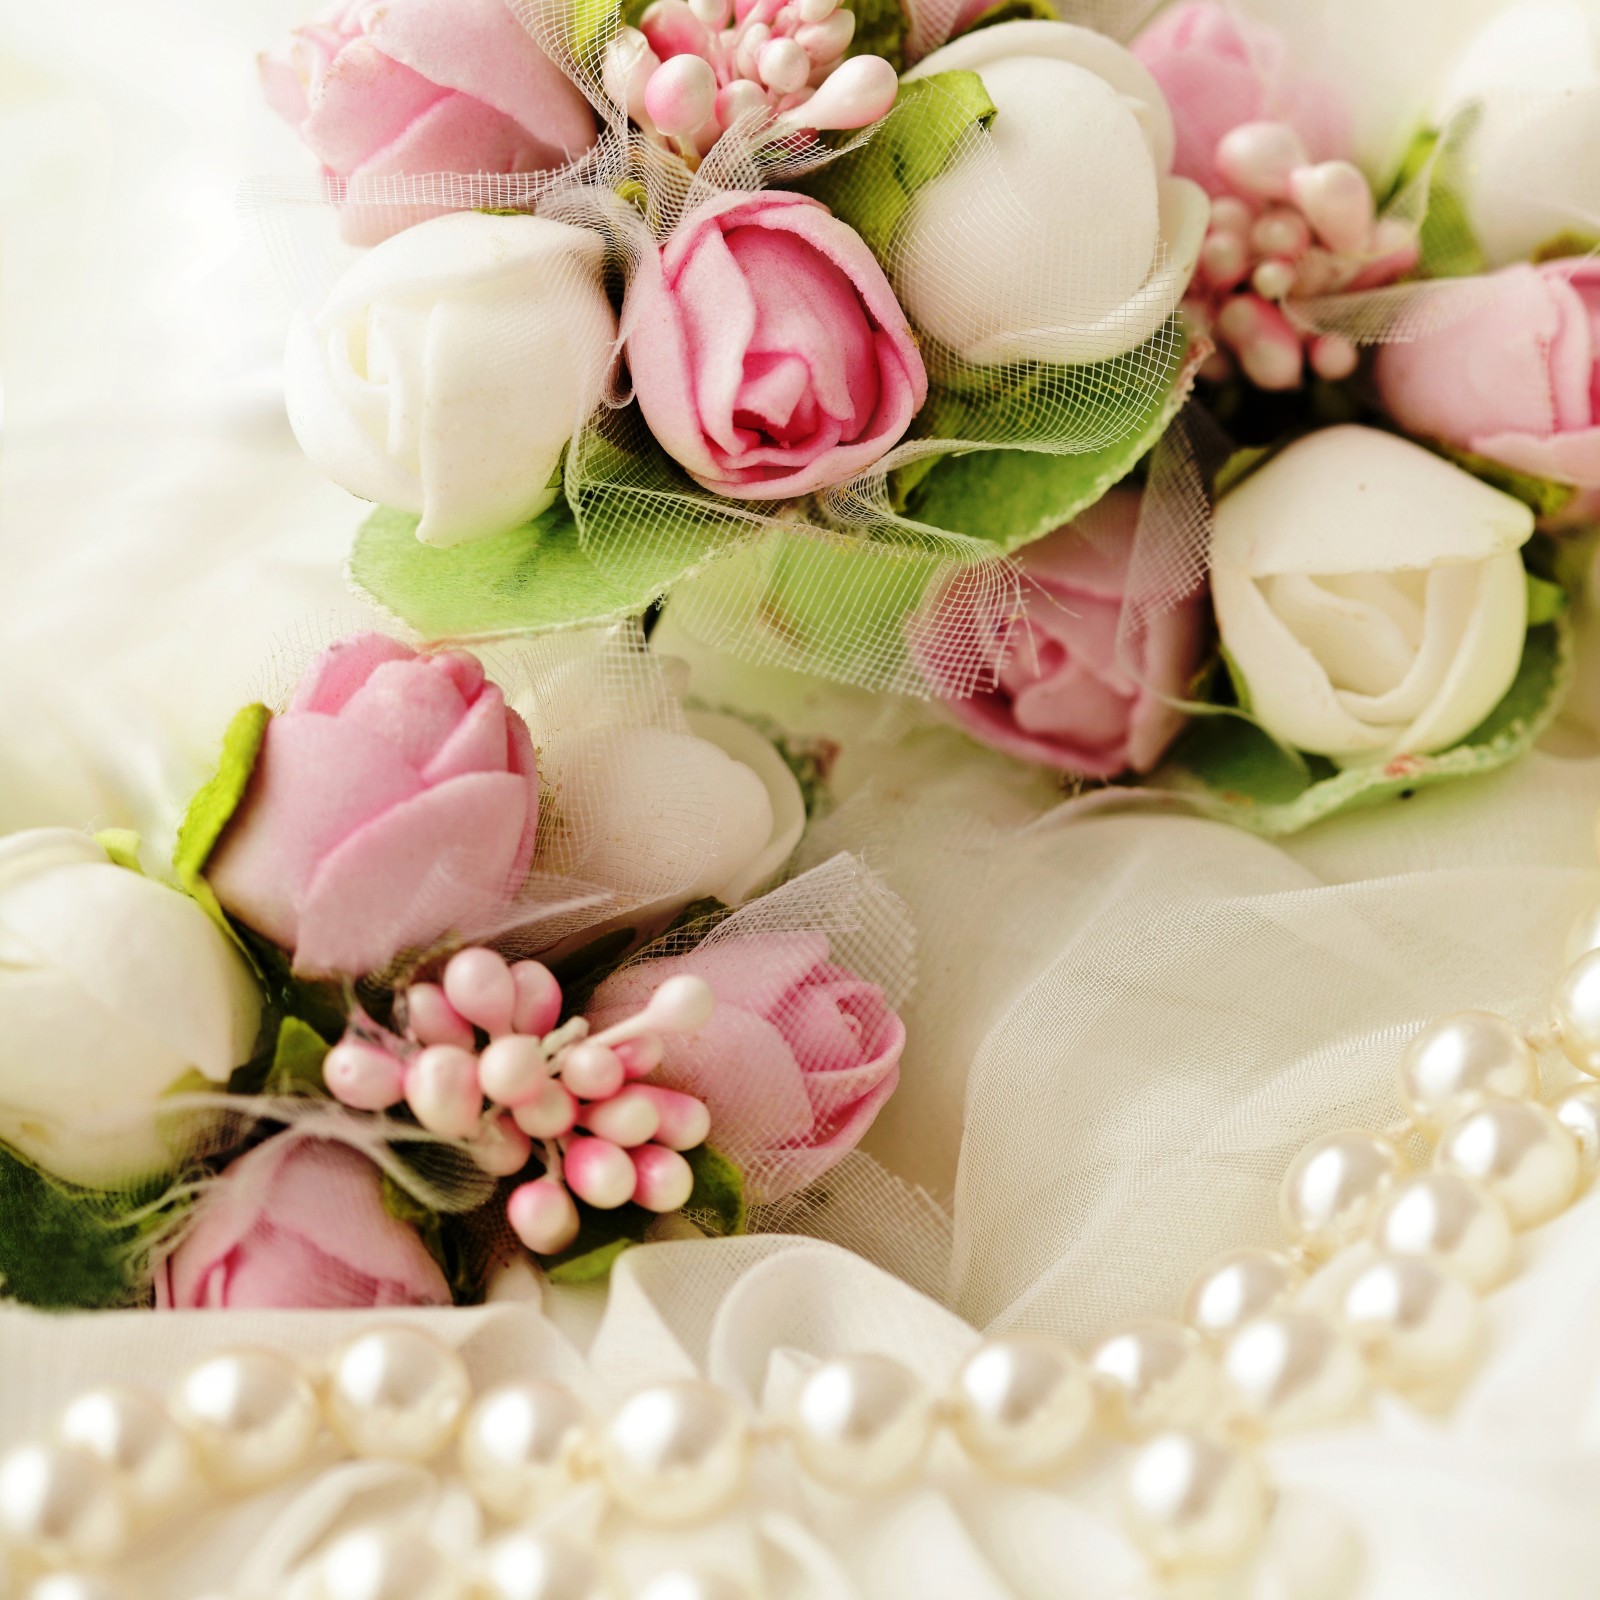 mawar, Merah Jambu, bunga-bunga, putih, buket, tunas, tunas, pernikahan